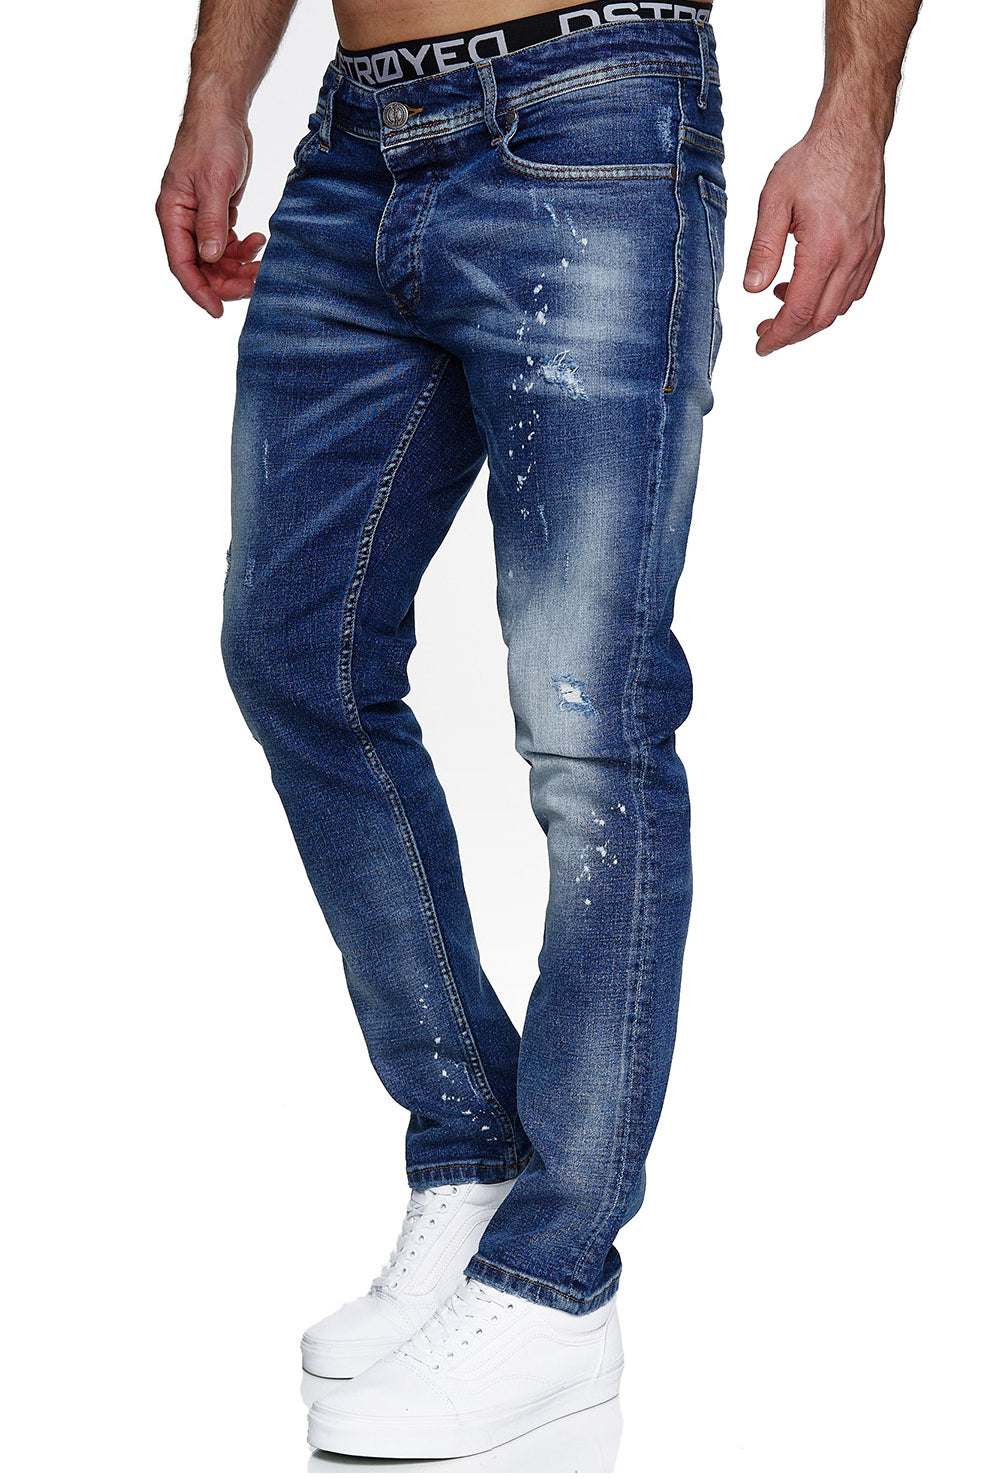 Jeans Slim Fit Jeanshose Stretch Denim Designer Hose 1507-4-Farbe-Blau_final